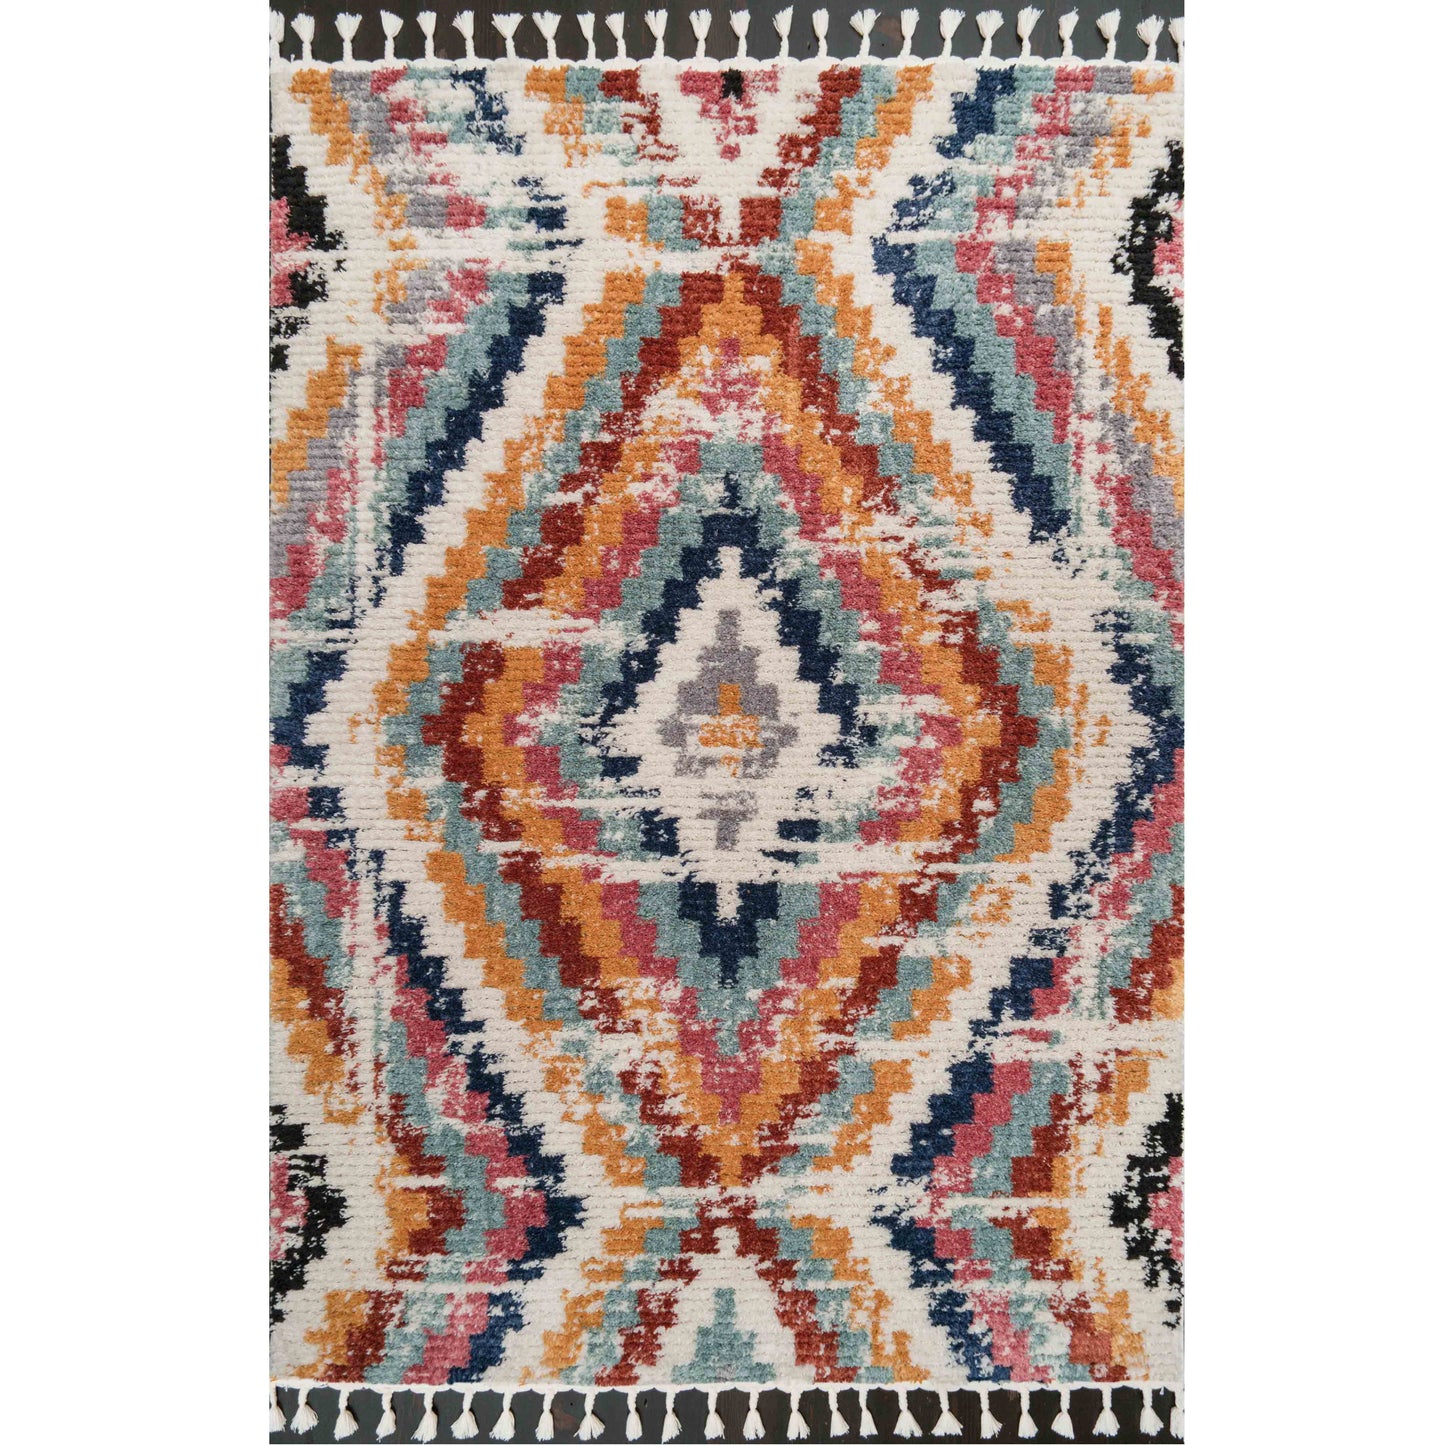 Vibrant Colourful Kilim Distressed Moroccan Living Room Rug